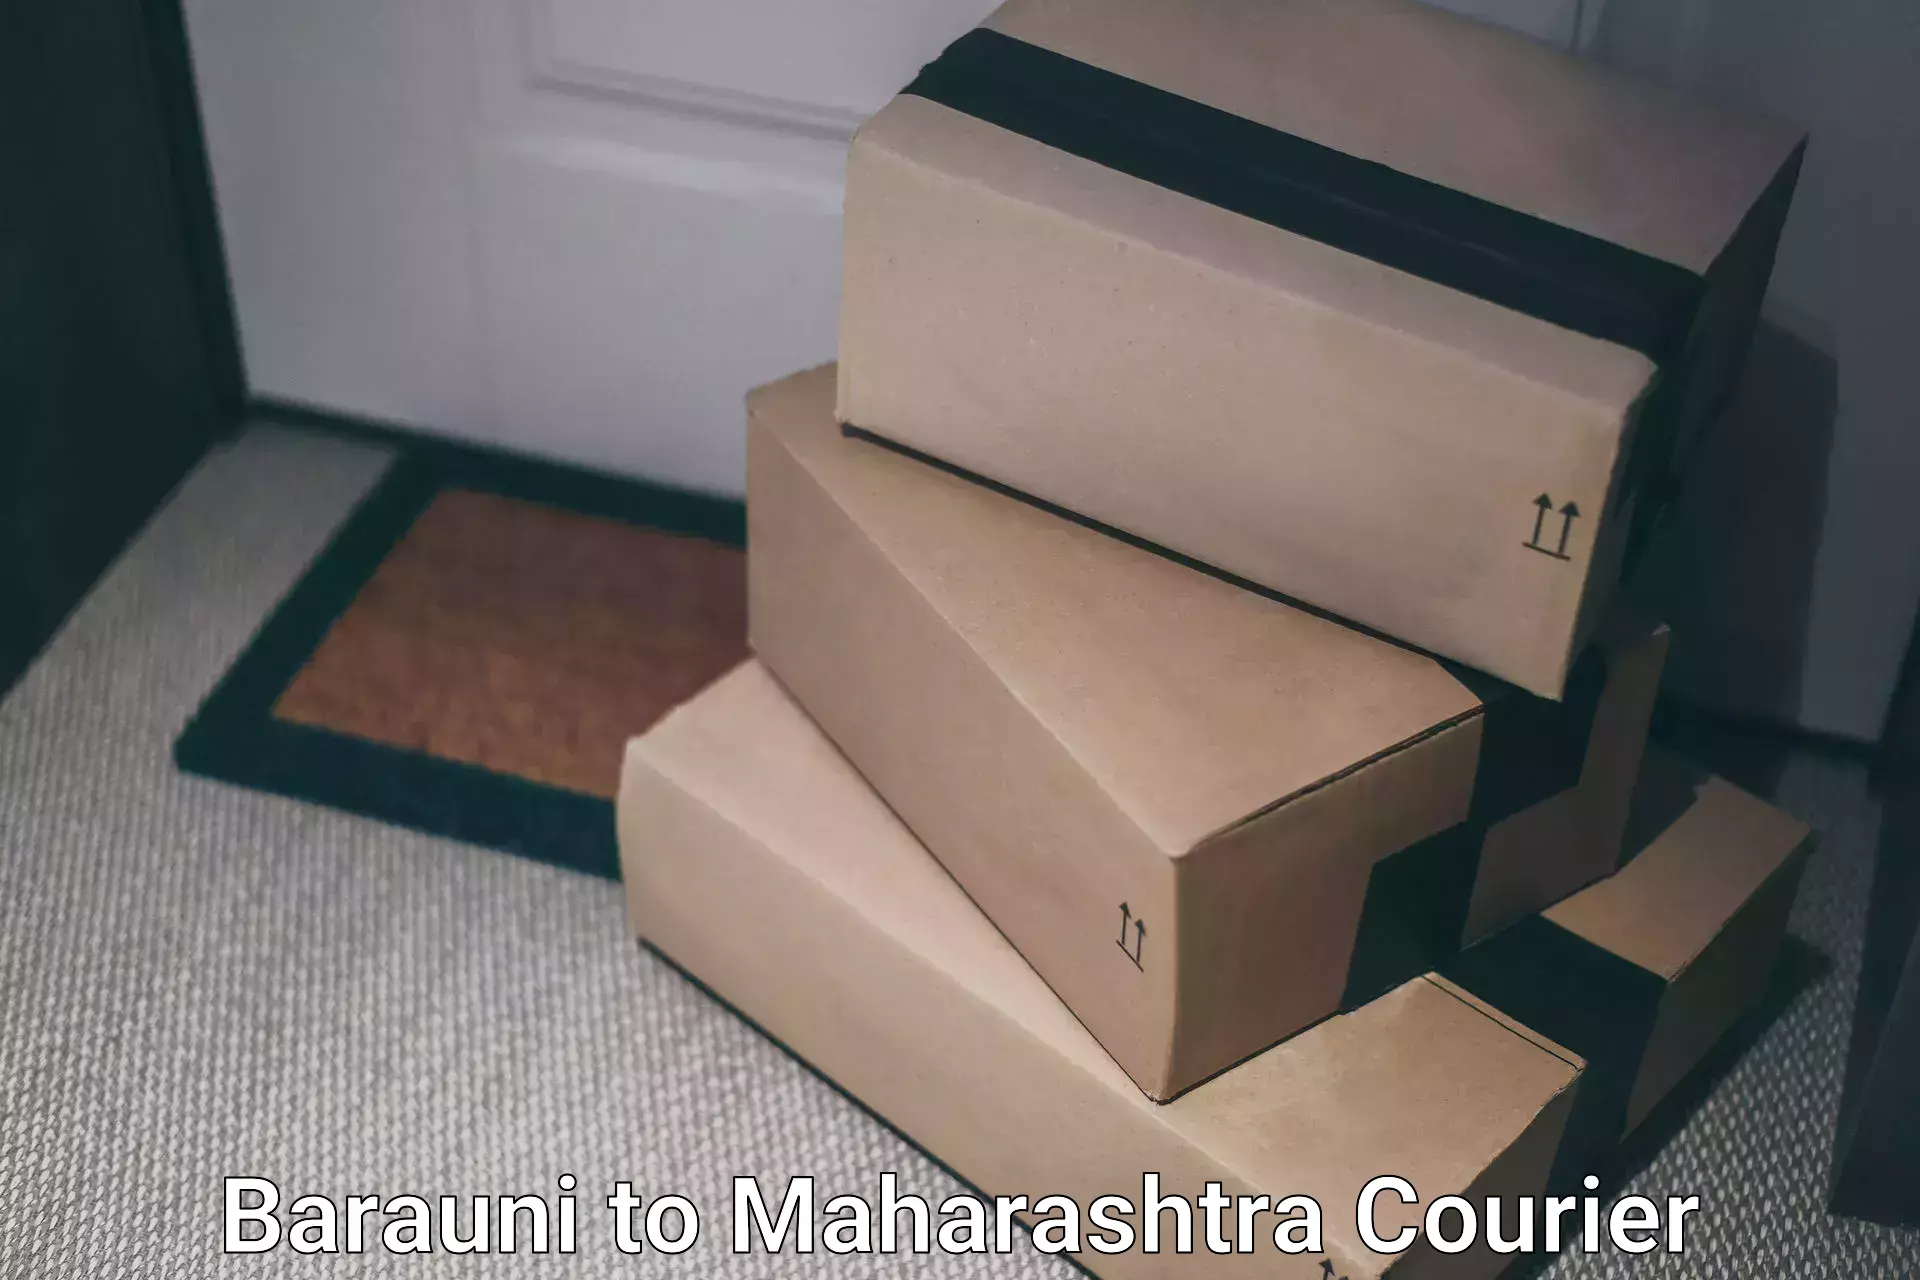 Advanced delivery network Barauni to Maharashtra